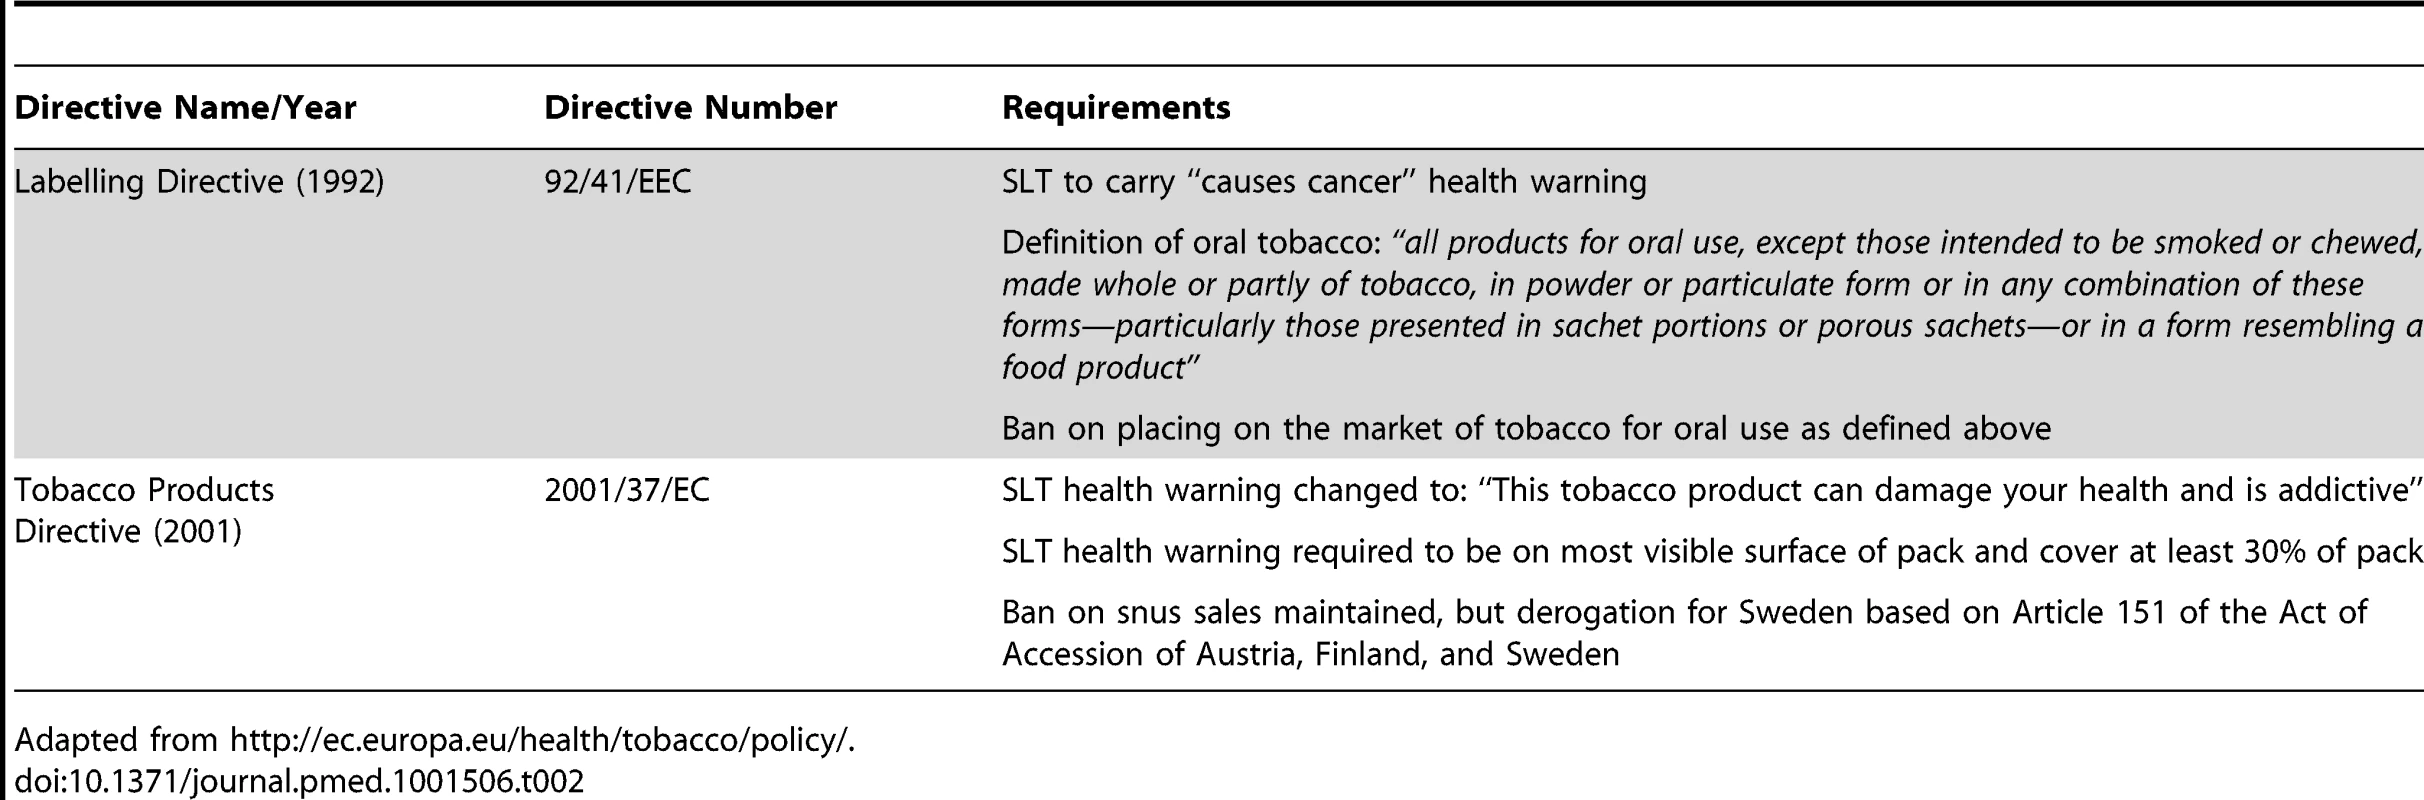 EU Tobacco Control Directives specifically addressing SLT.